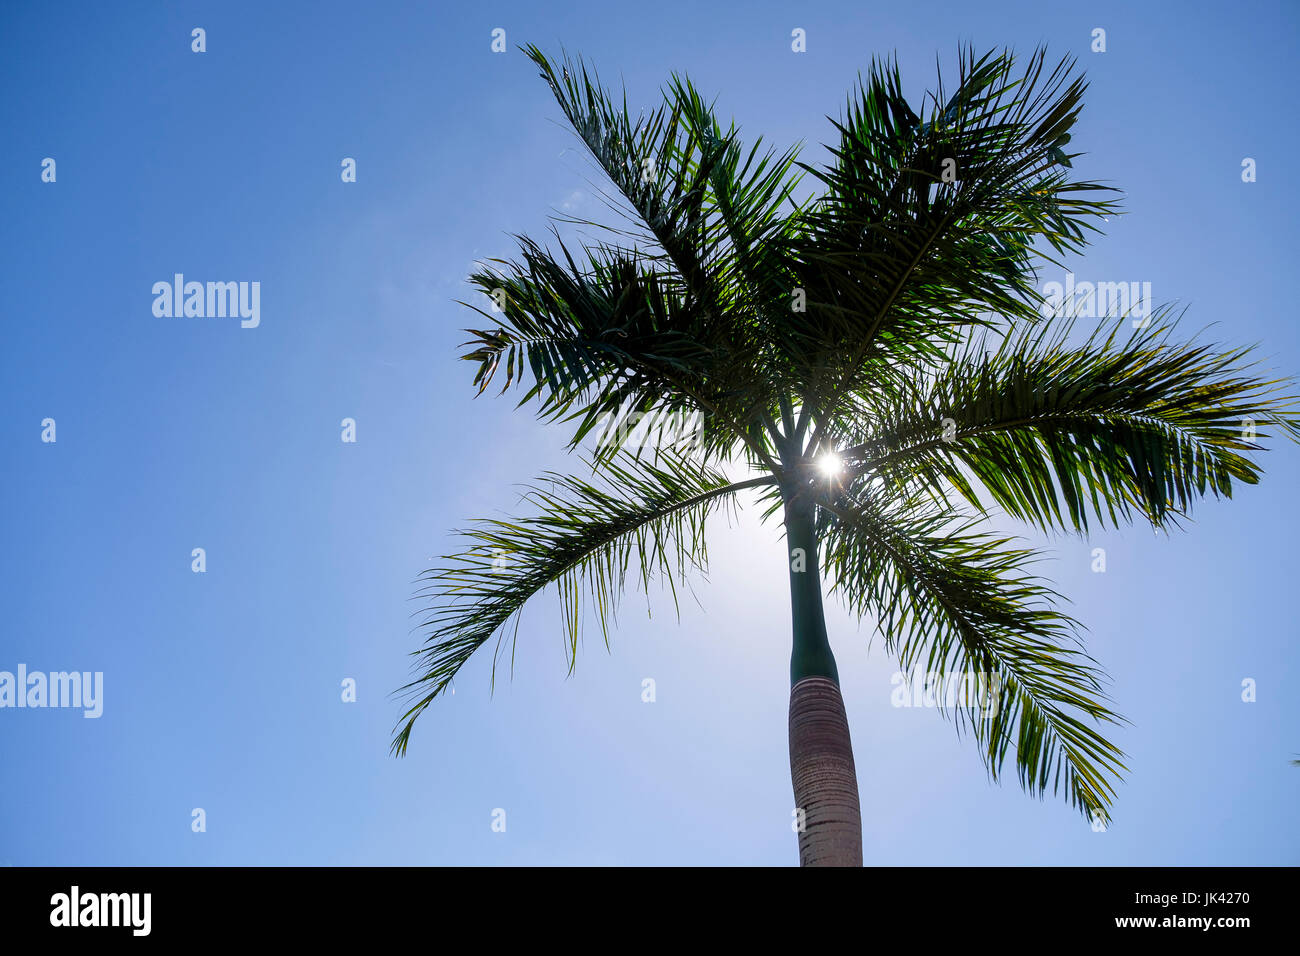 Palm tree in blue sky Stock Photo